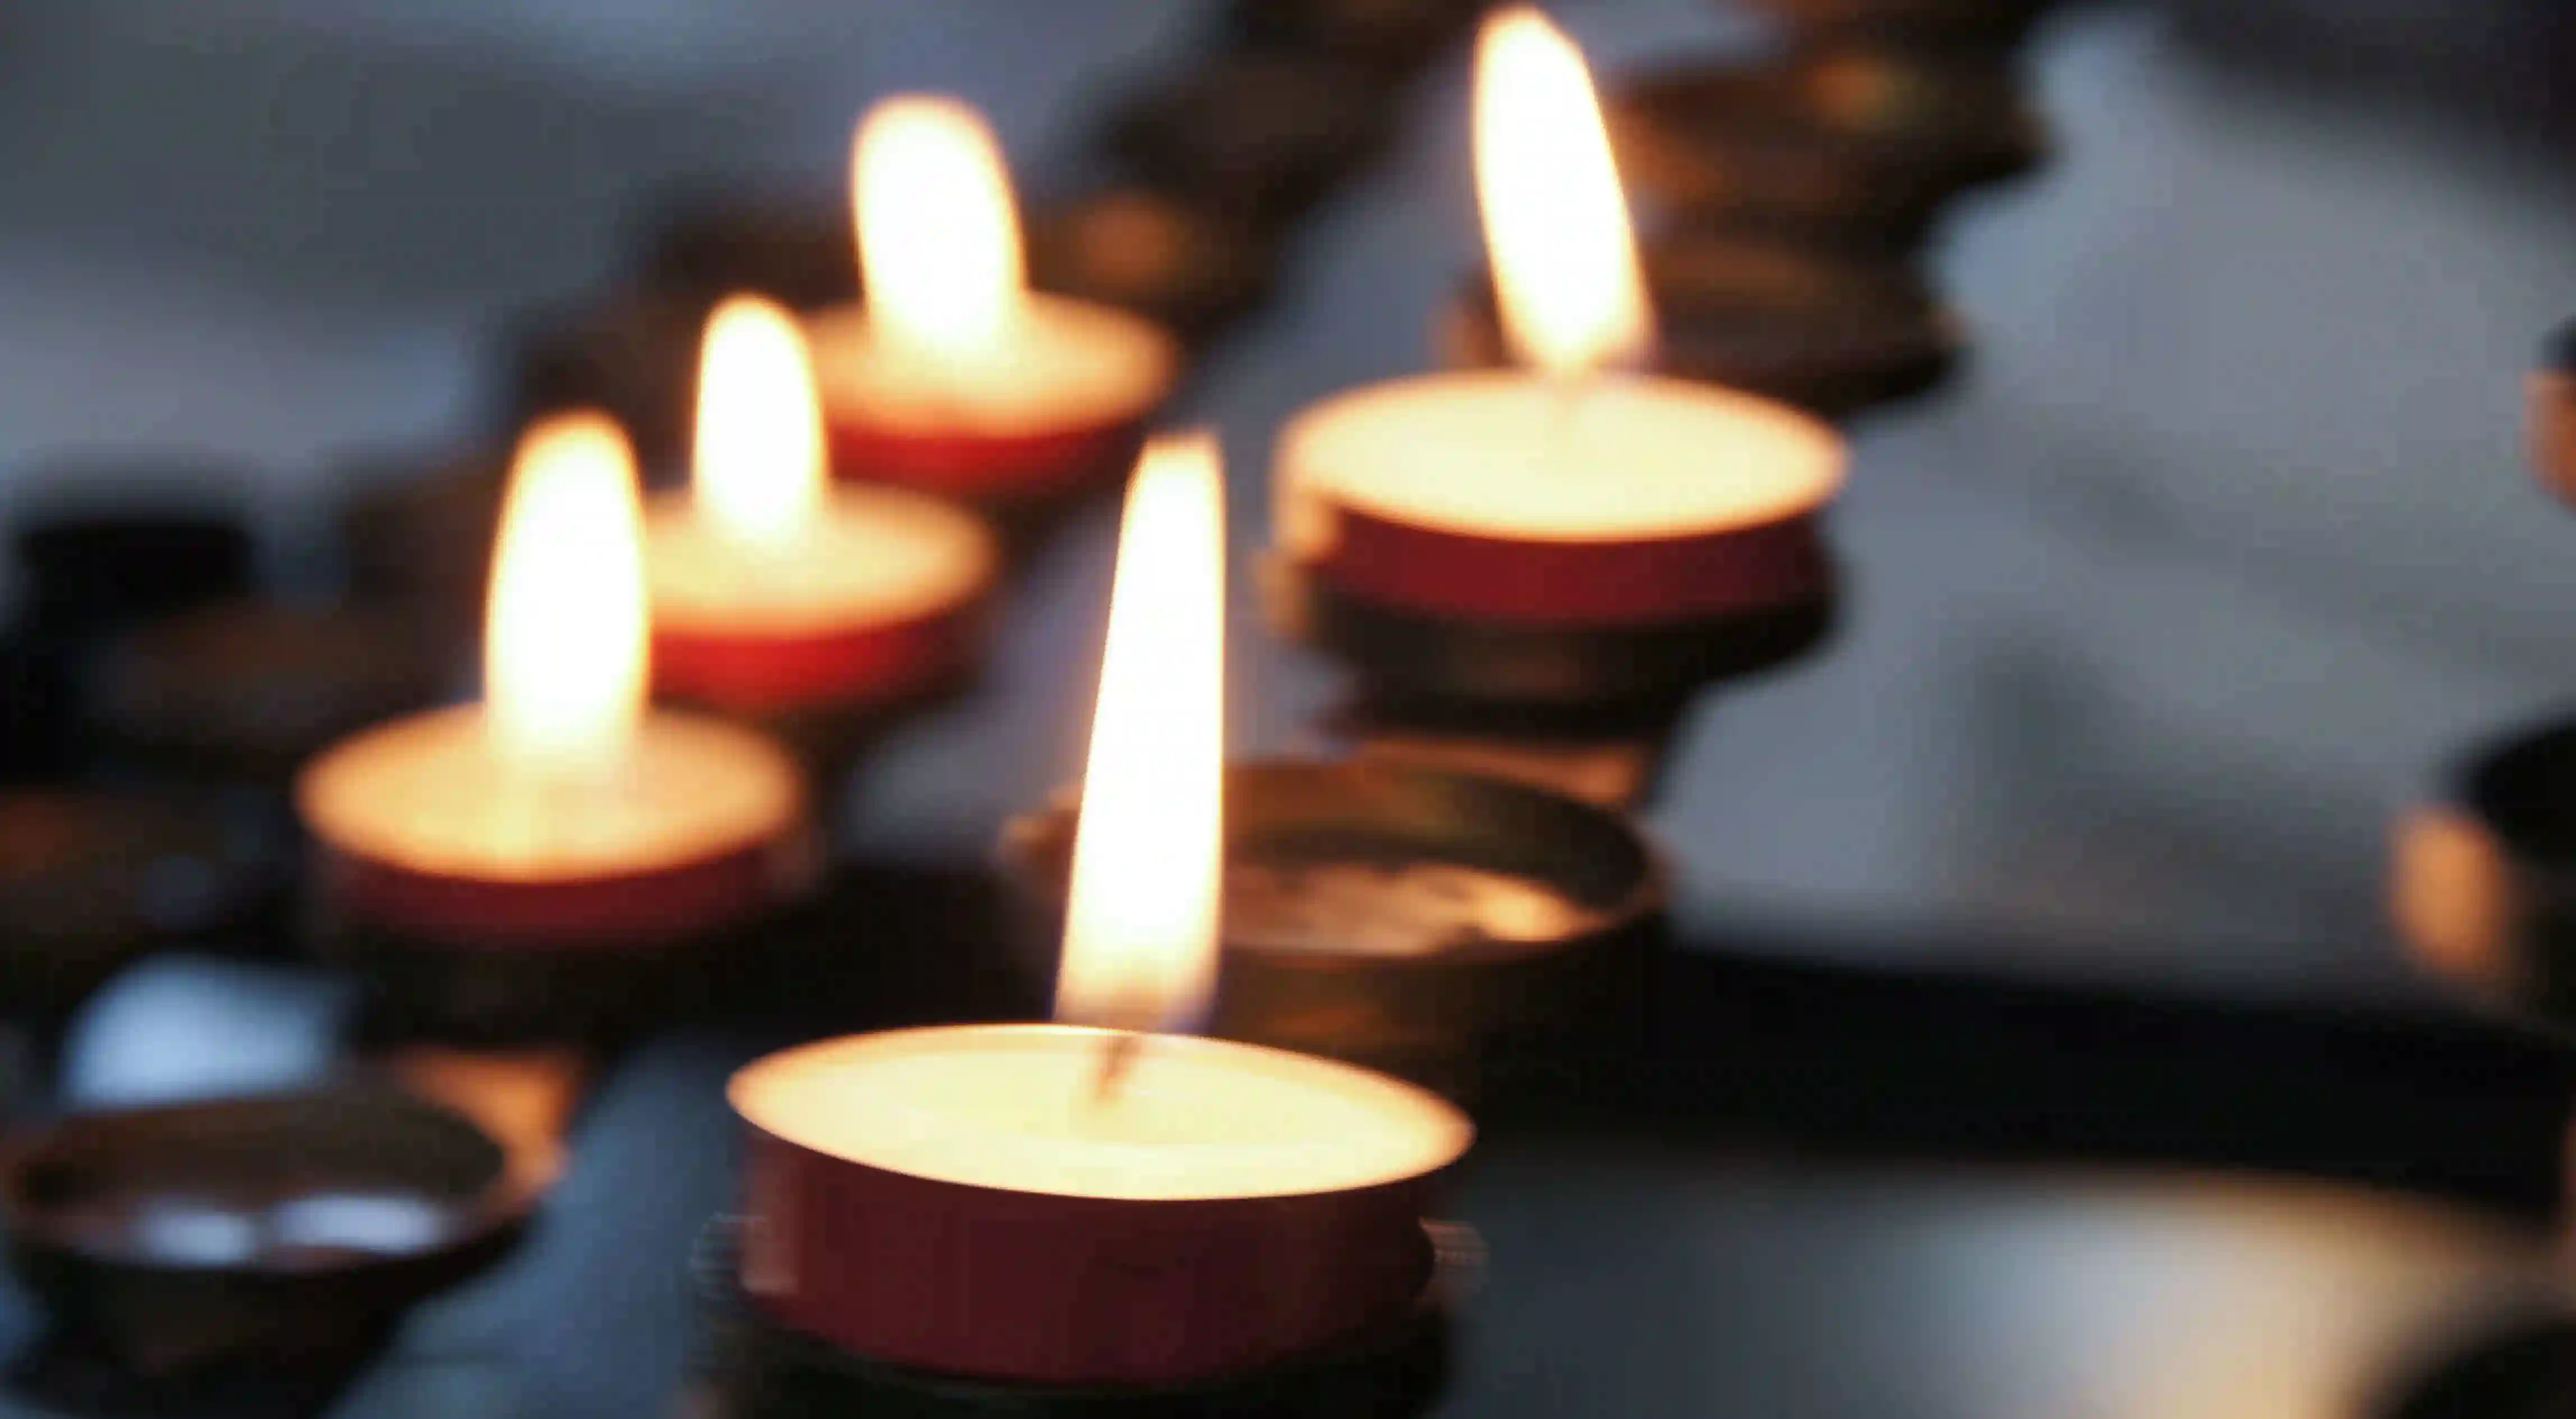 Bereavement candles